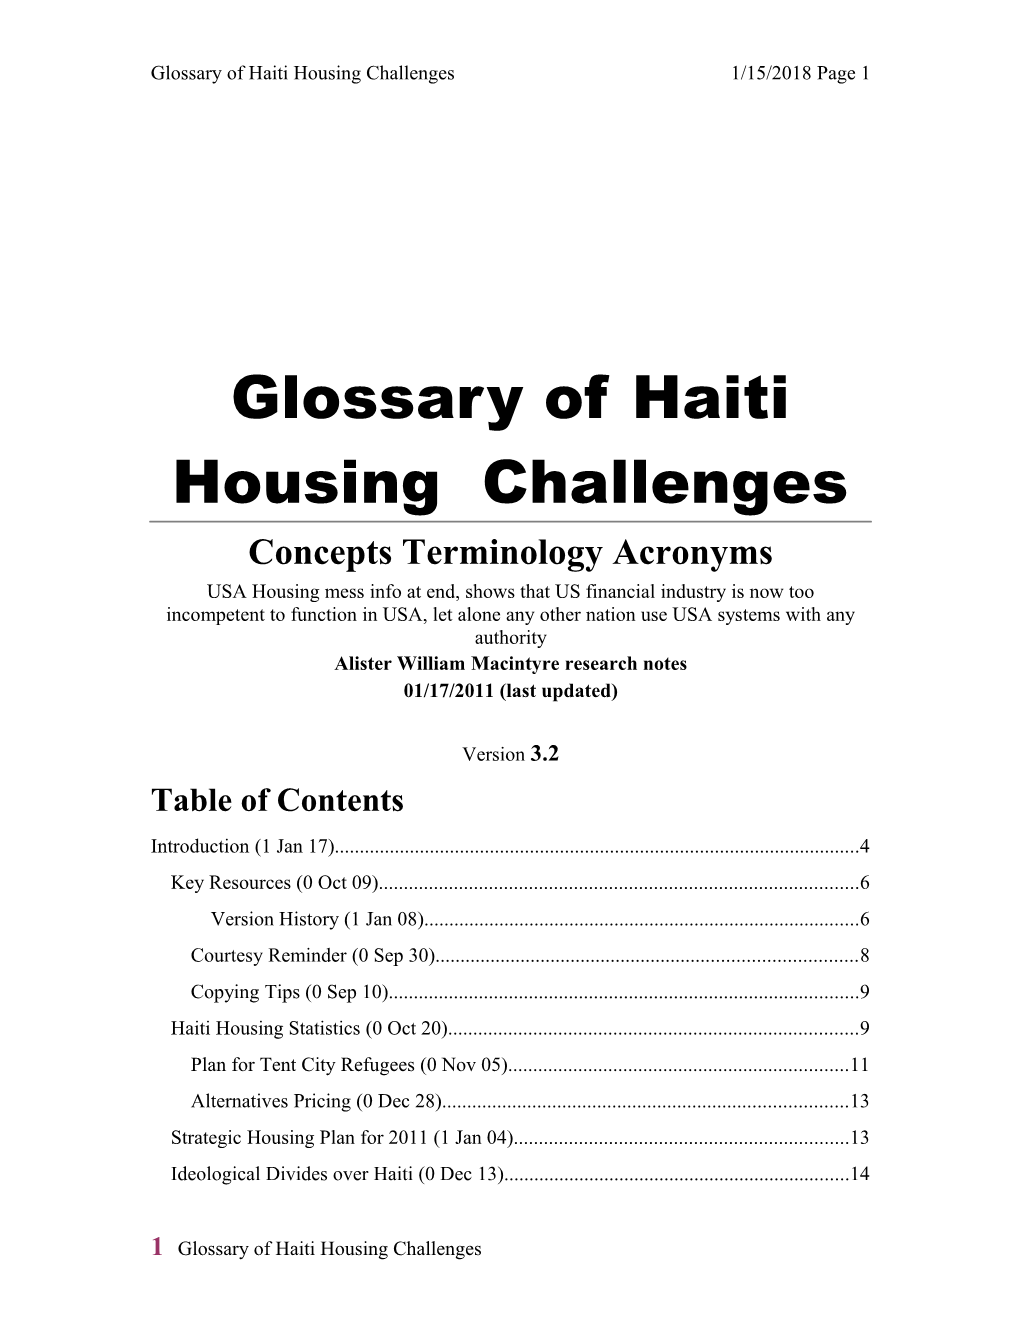 Haiti Political History